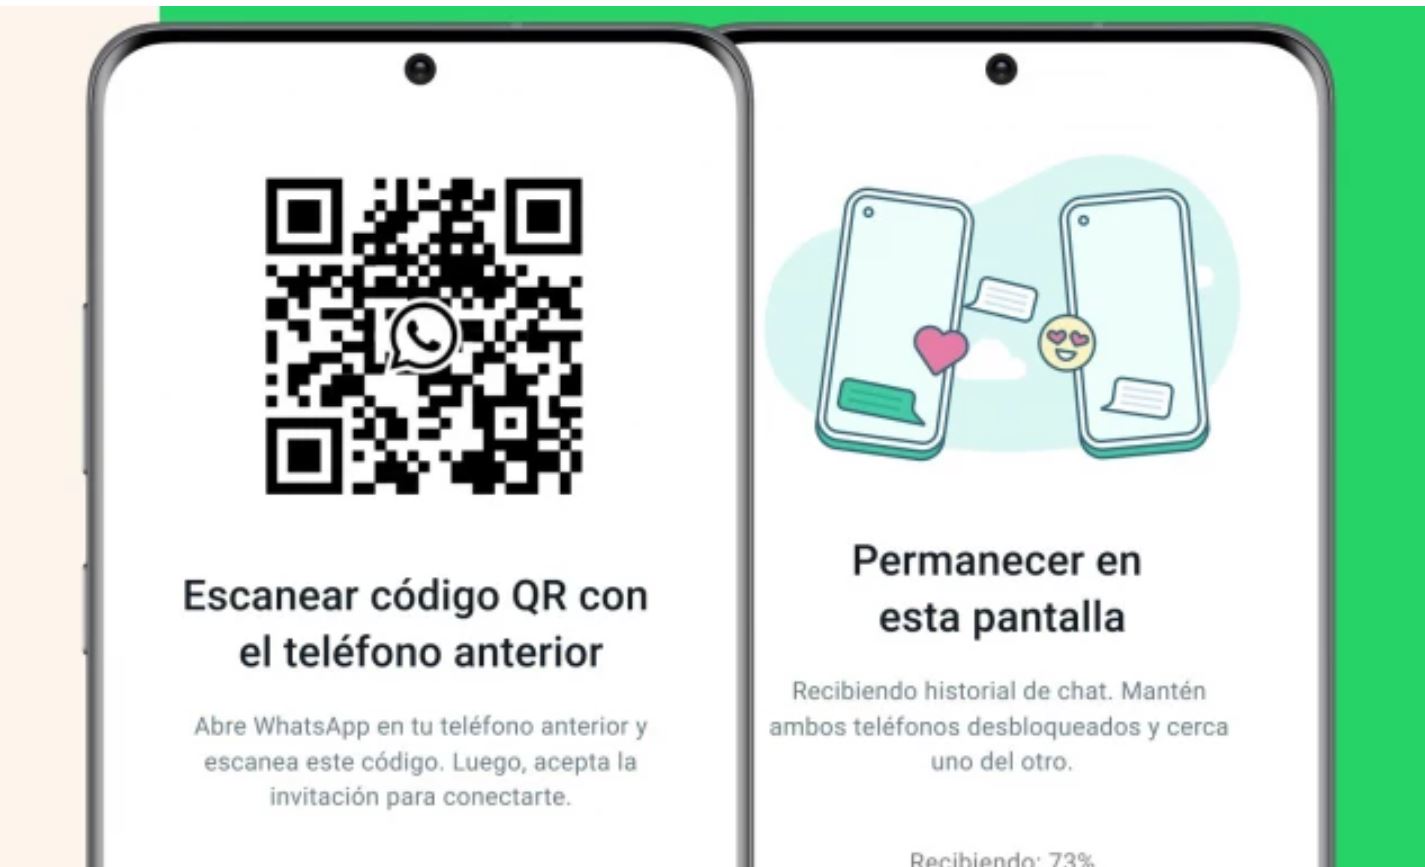 WhatsApp posibilita la transferencia del historial de chats entre smartphones mediante un QR